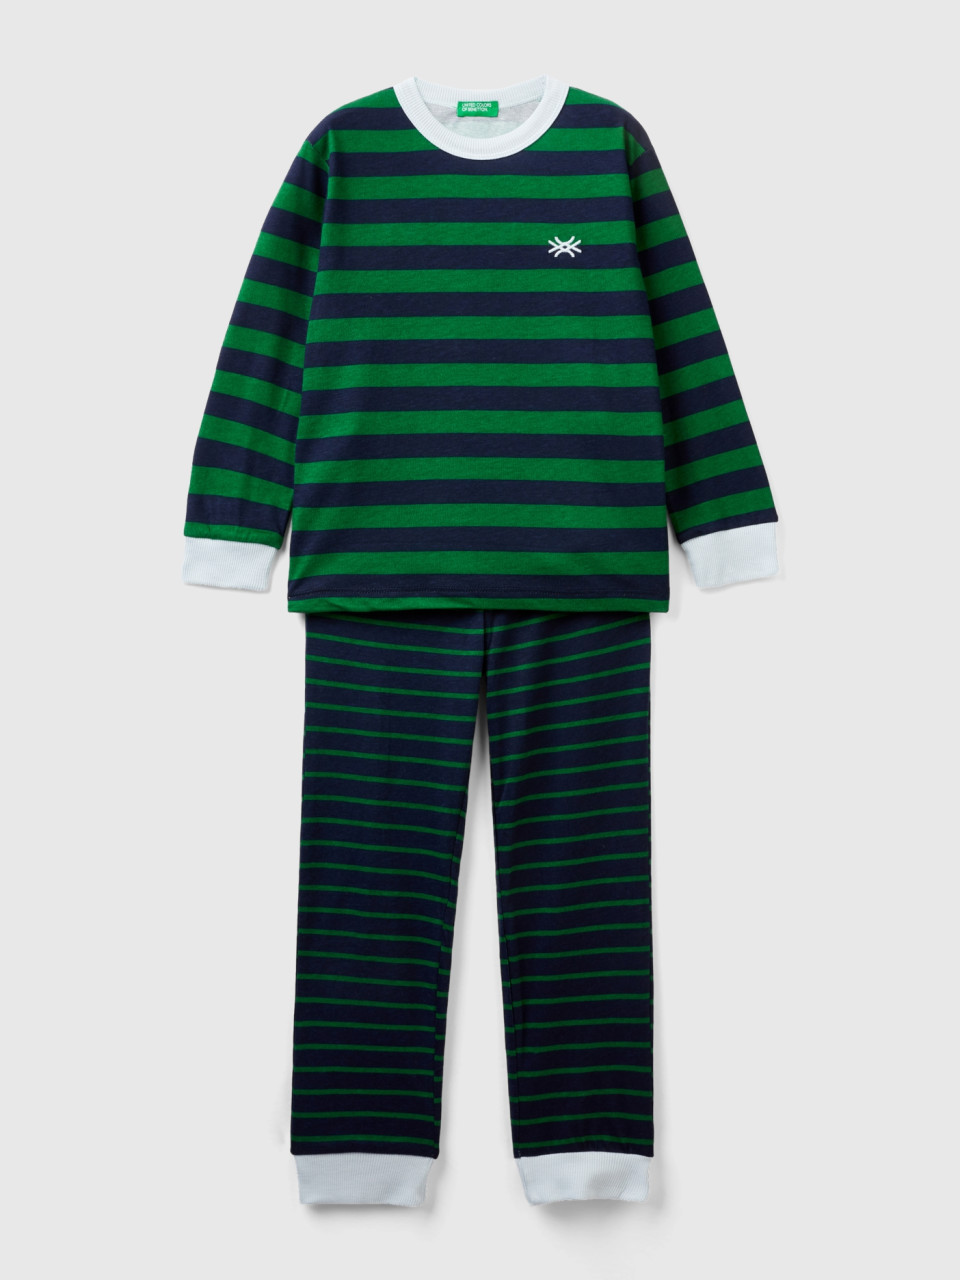 Benetton, Long Striped Pyjamas, Multi-color, Kids